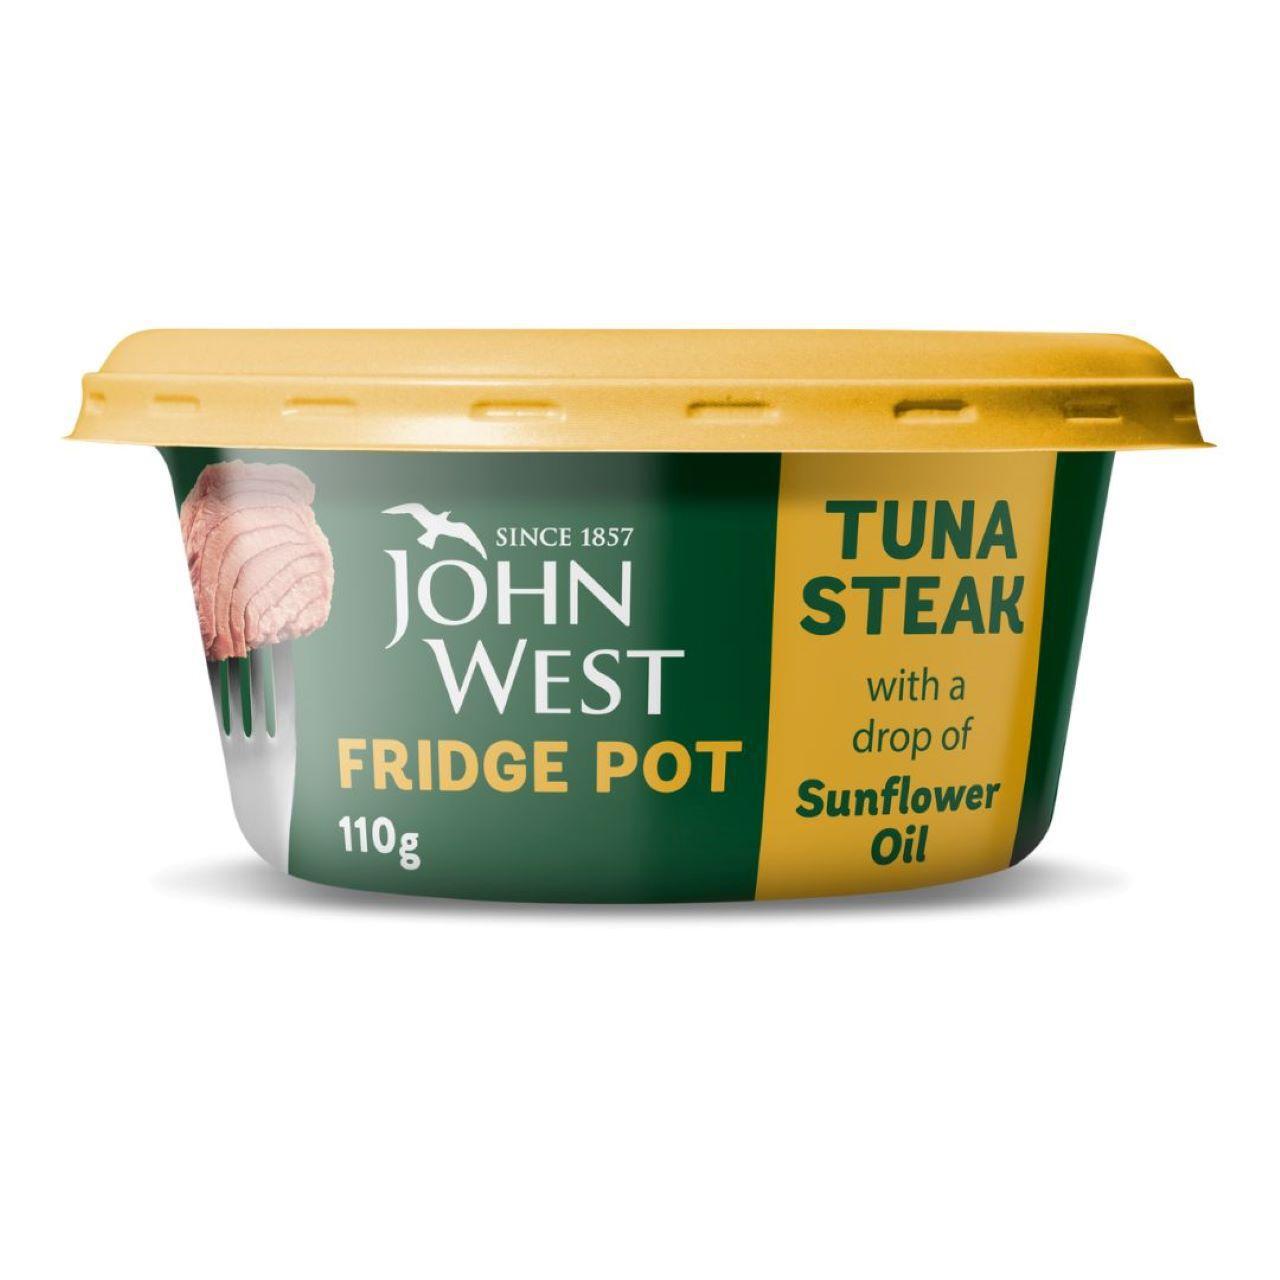 John West No Drain Fridge Pot Tuna Steak In Sunflower Oil 3 Pack 3 x 110g